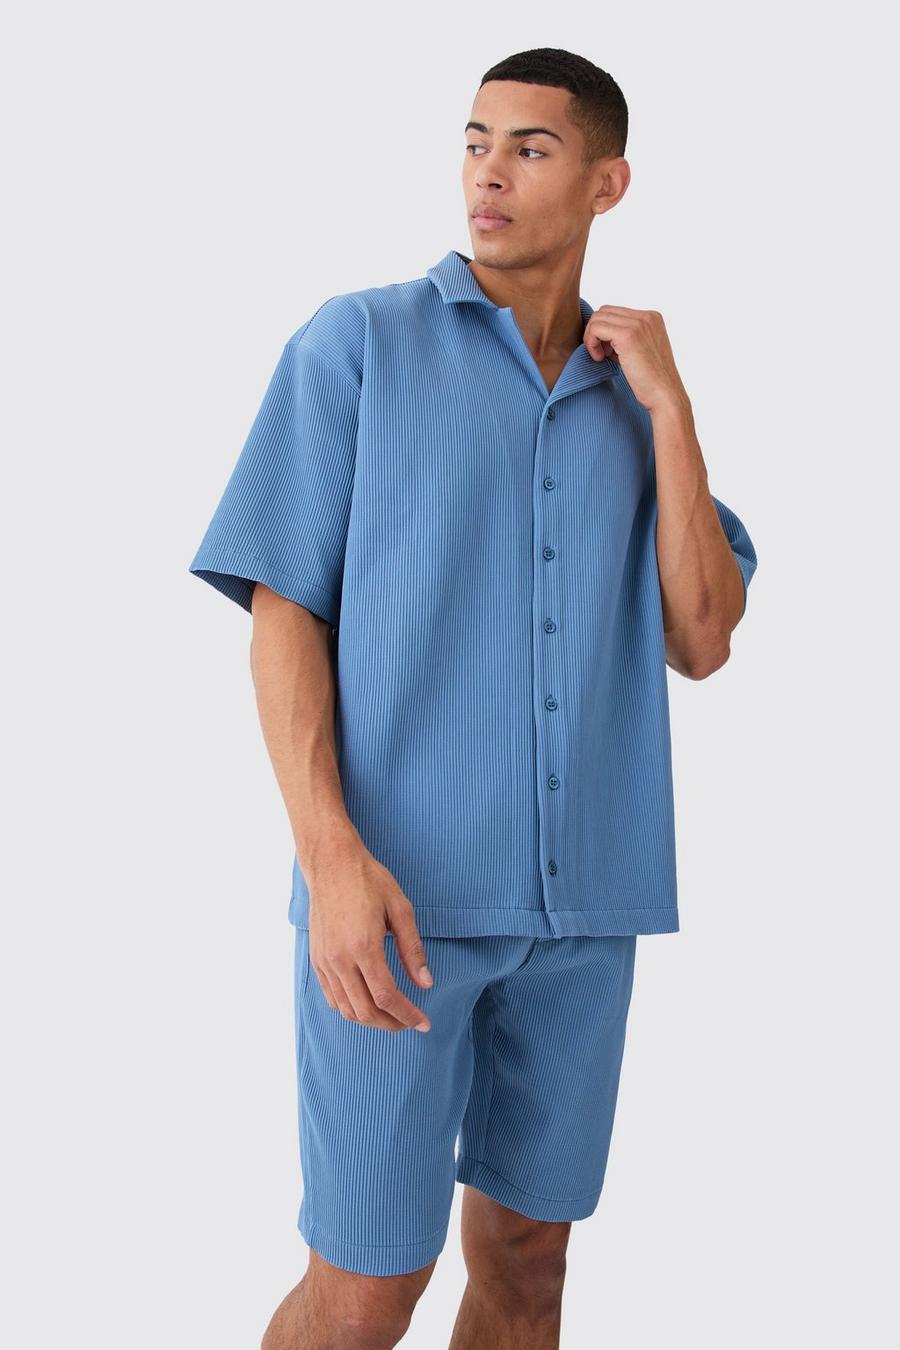 Blue Oversized Pleated Shirt And Short